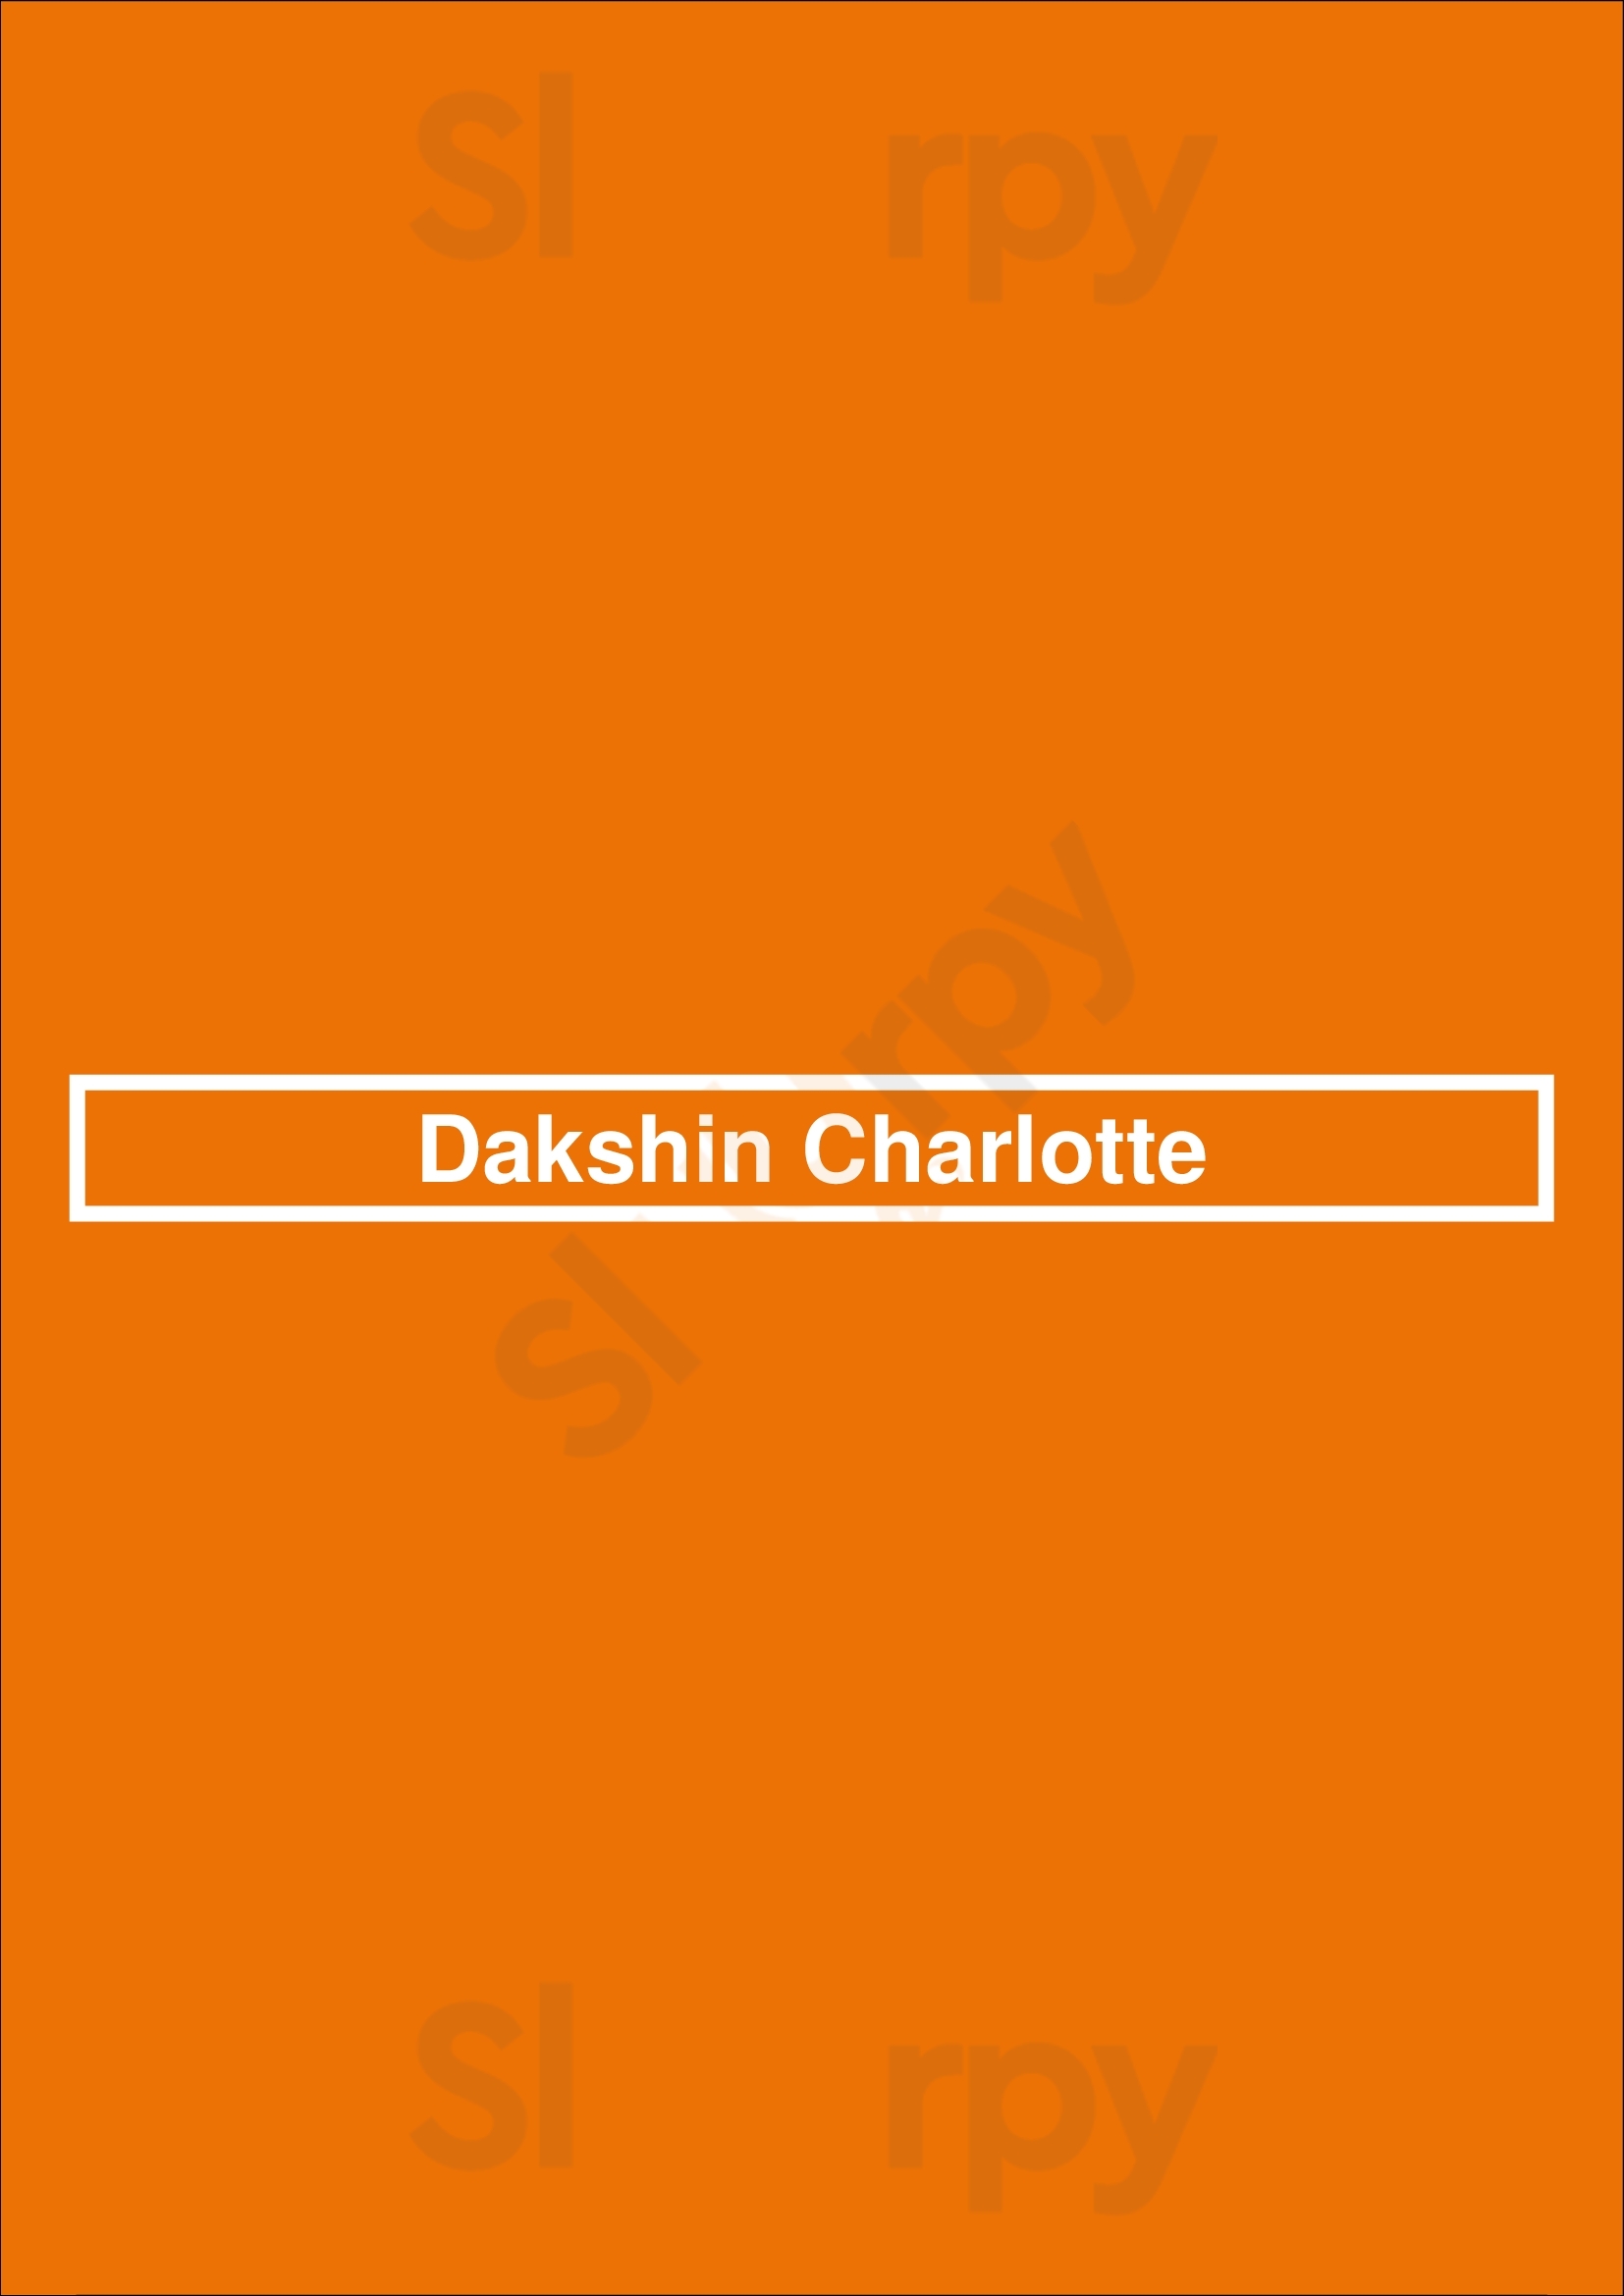 Dakshin Indian Grill Charlotte Menu - 1